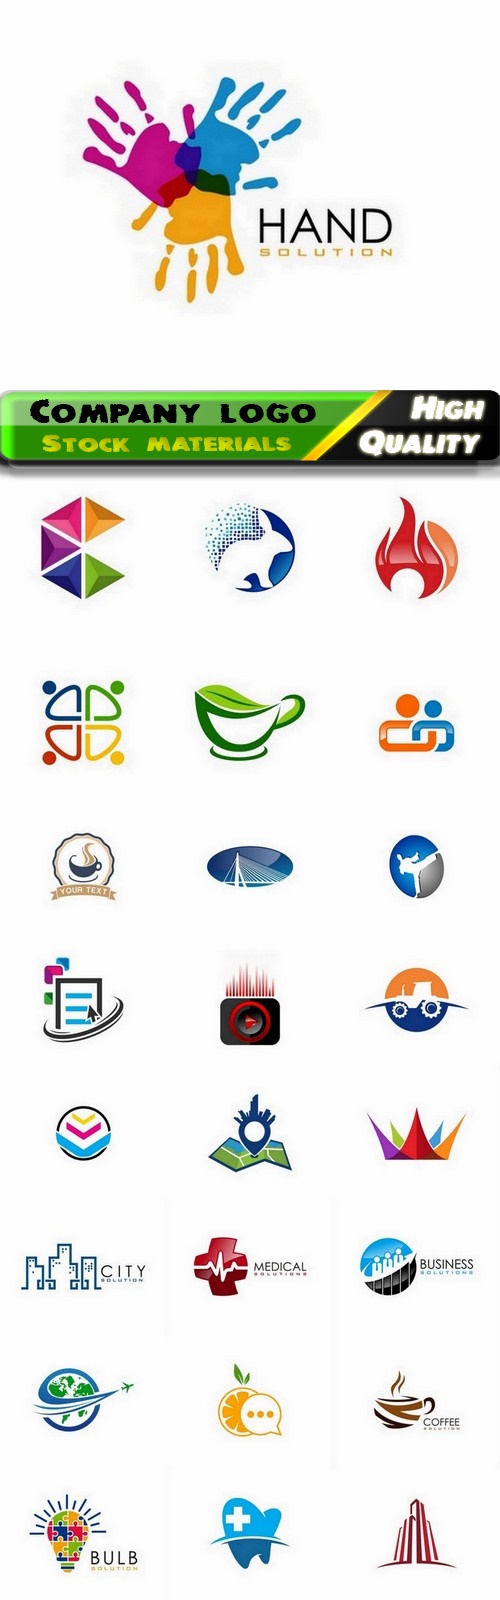 Business corporate logo and company identity badge emblem 6 25 Eps